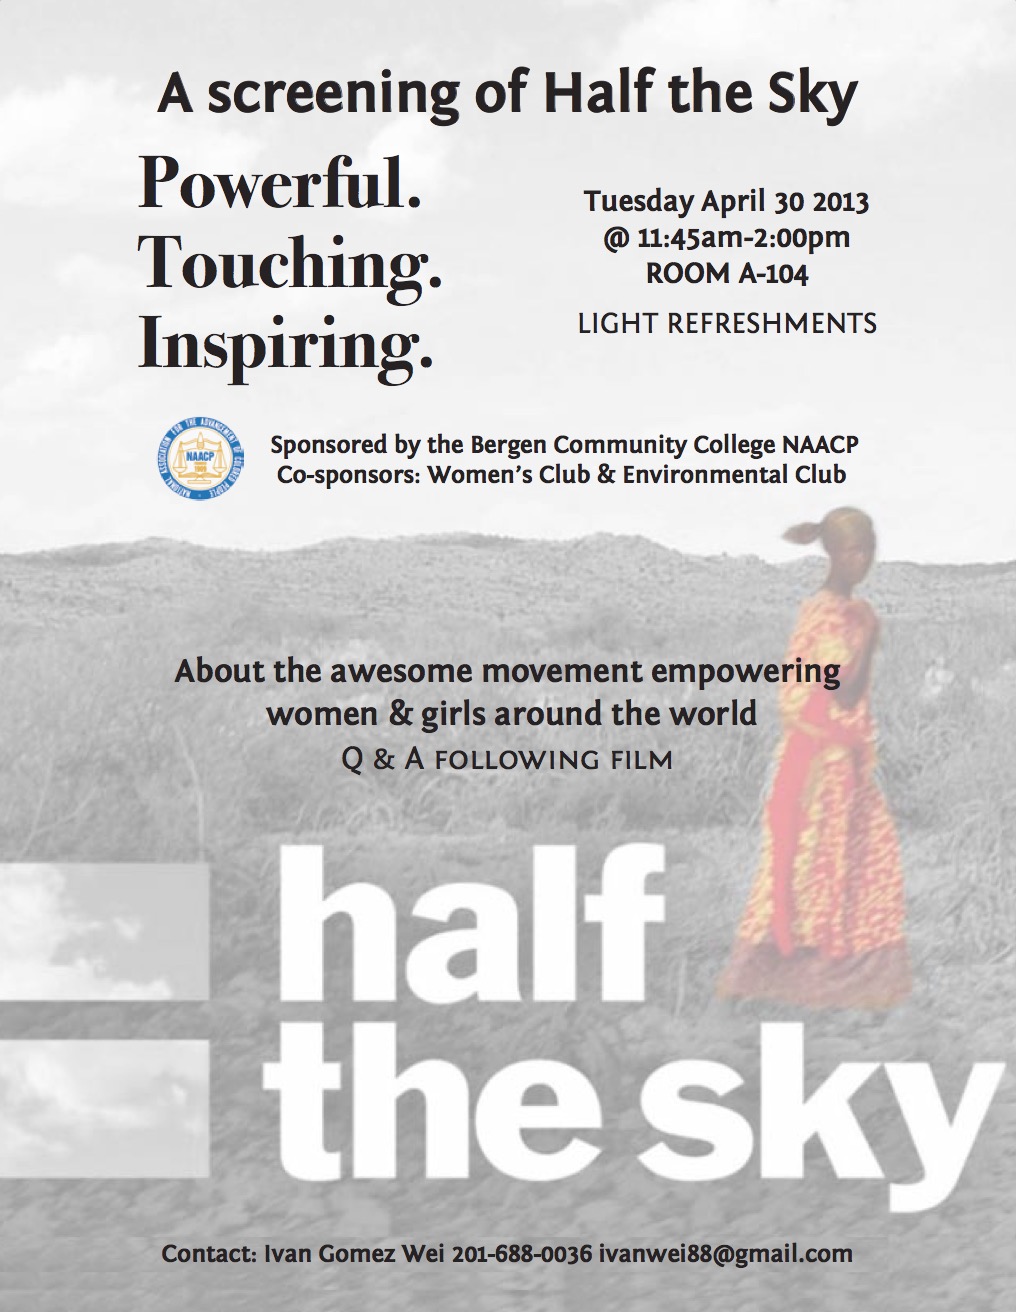 Half the Sky screening flyer